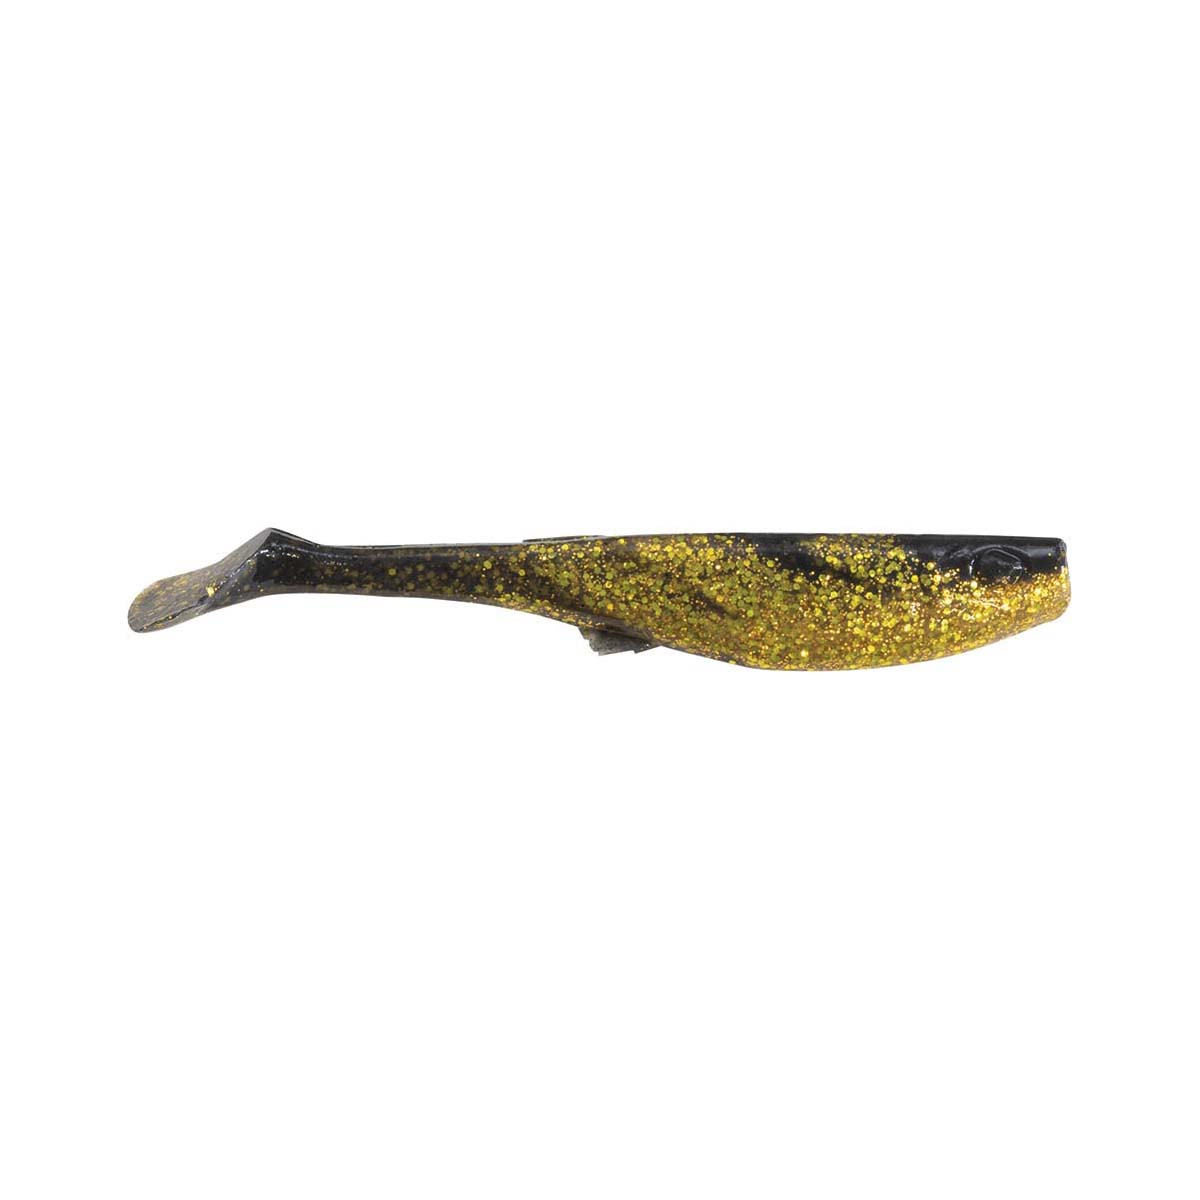 Berkley Gulp! Paddletail Shad Soft Plastic Lure 3in Black / Gold